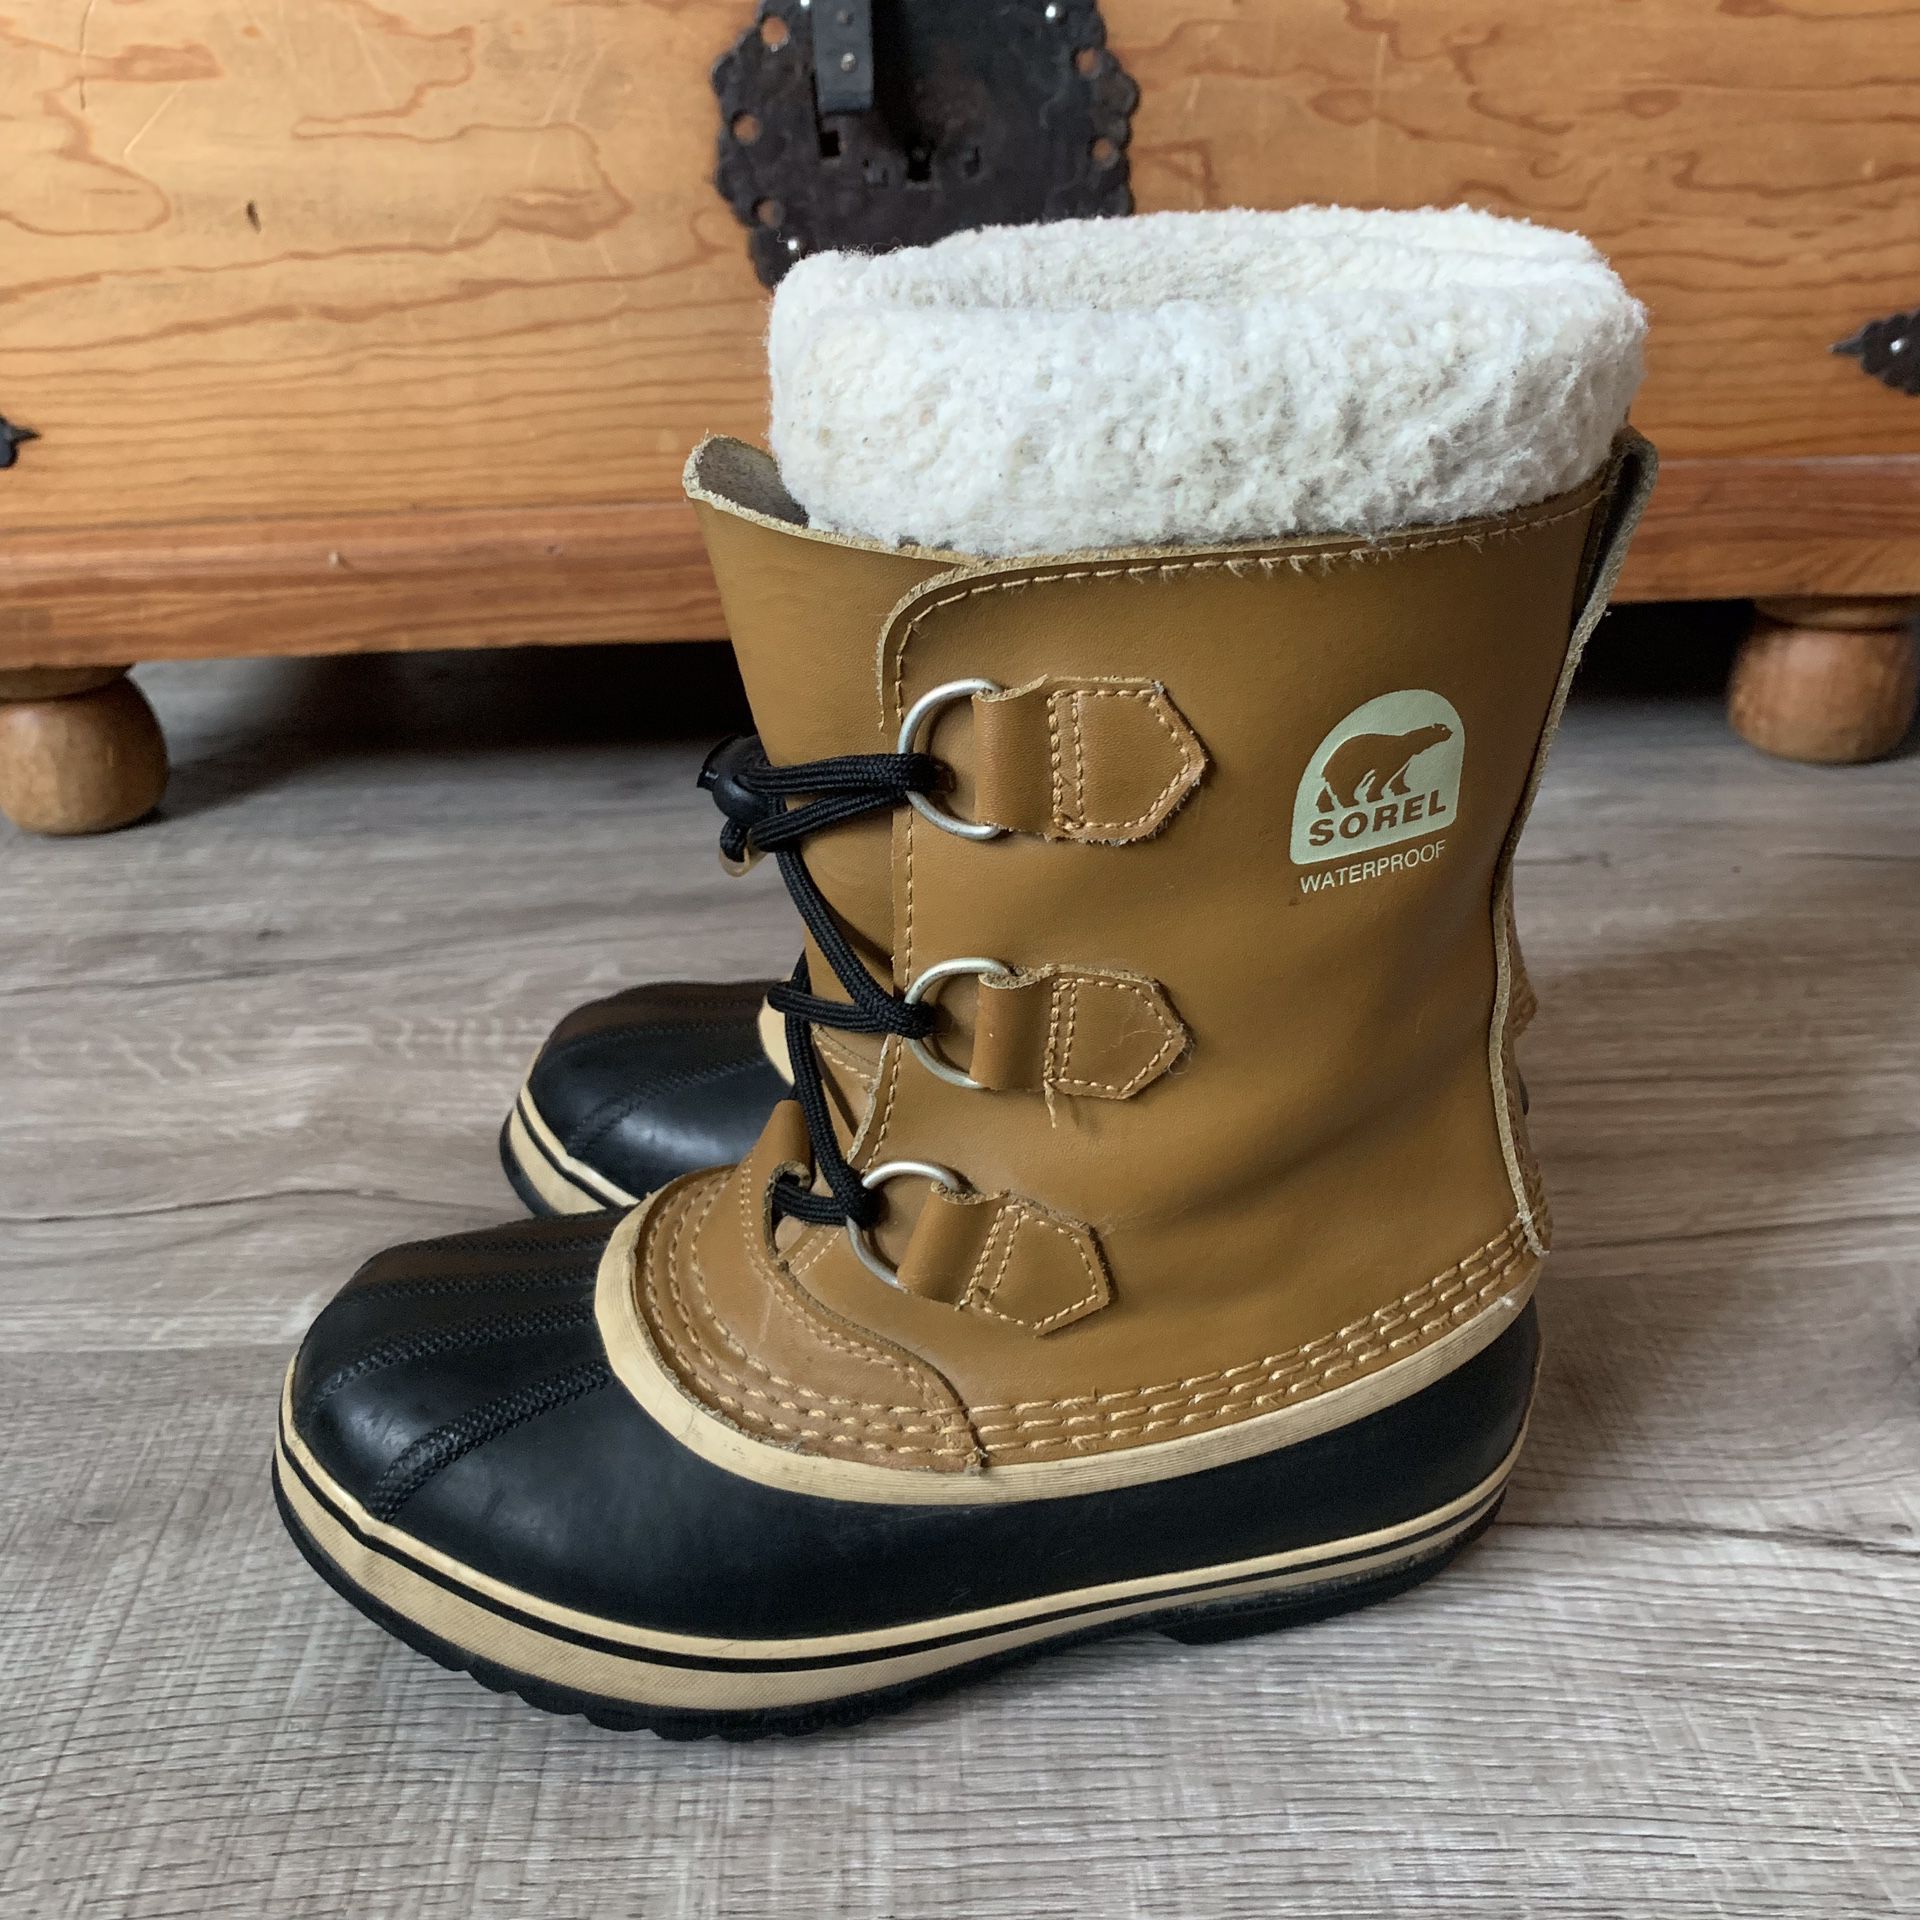 SOREL boots size 3